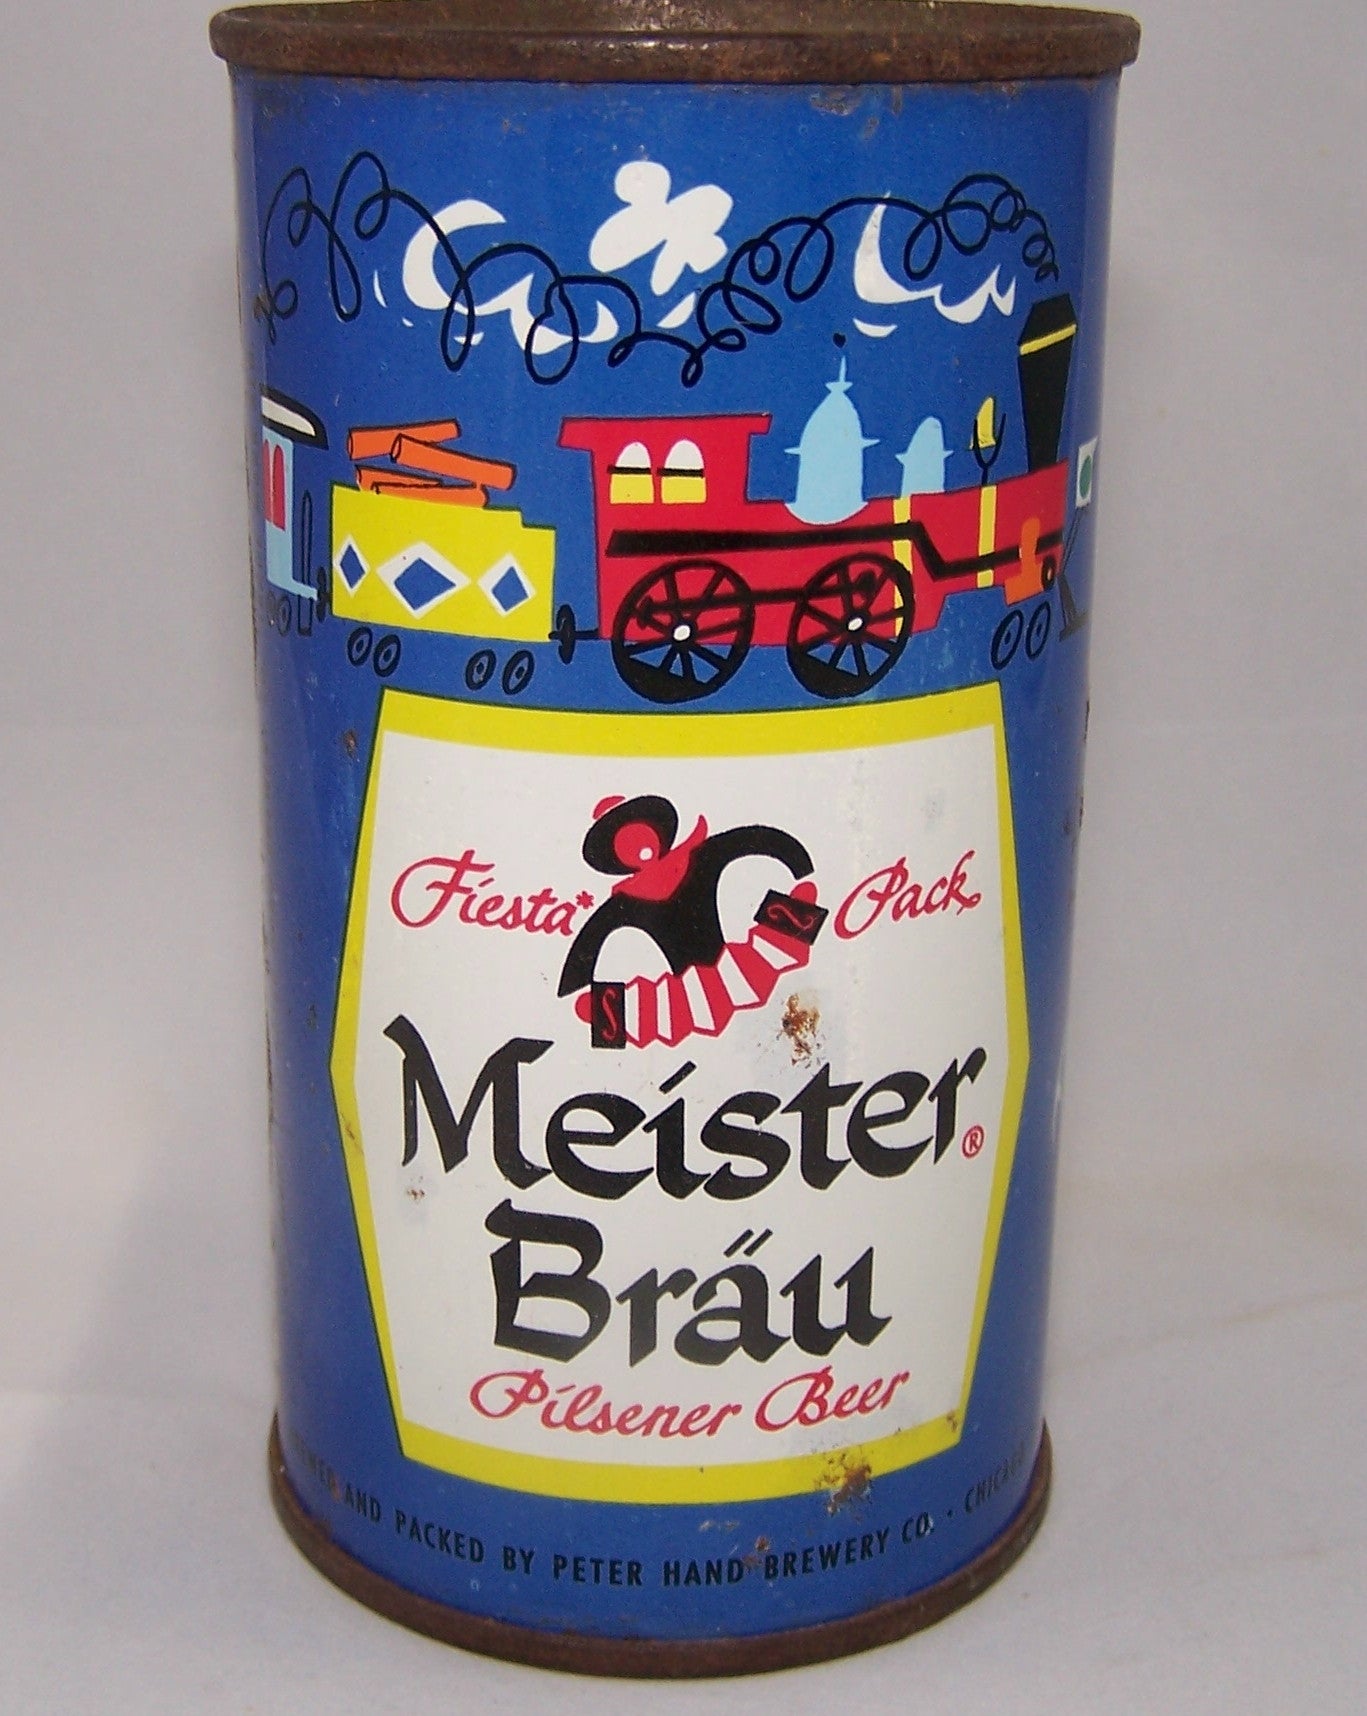 Meister Brau Fiesta Pack, USBC 97-37, Grade 1/1-sold 6/18/16